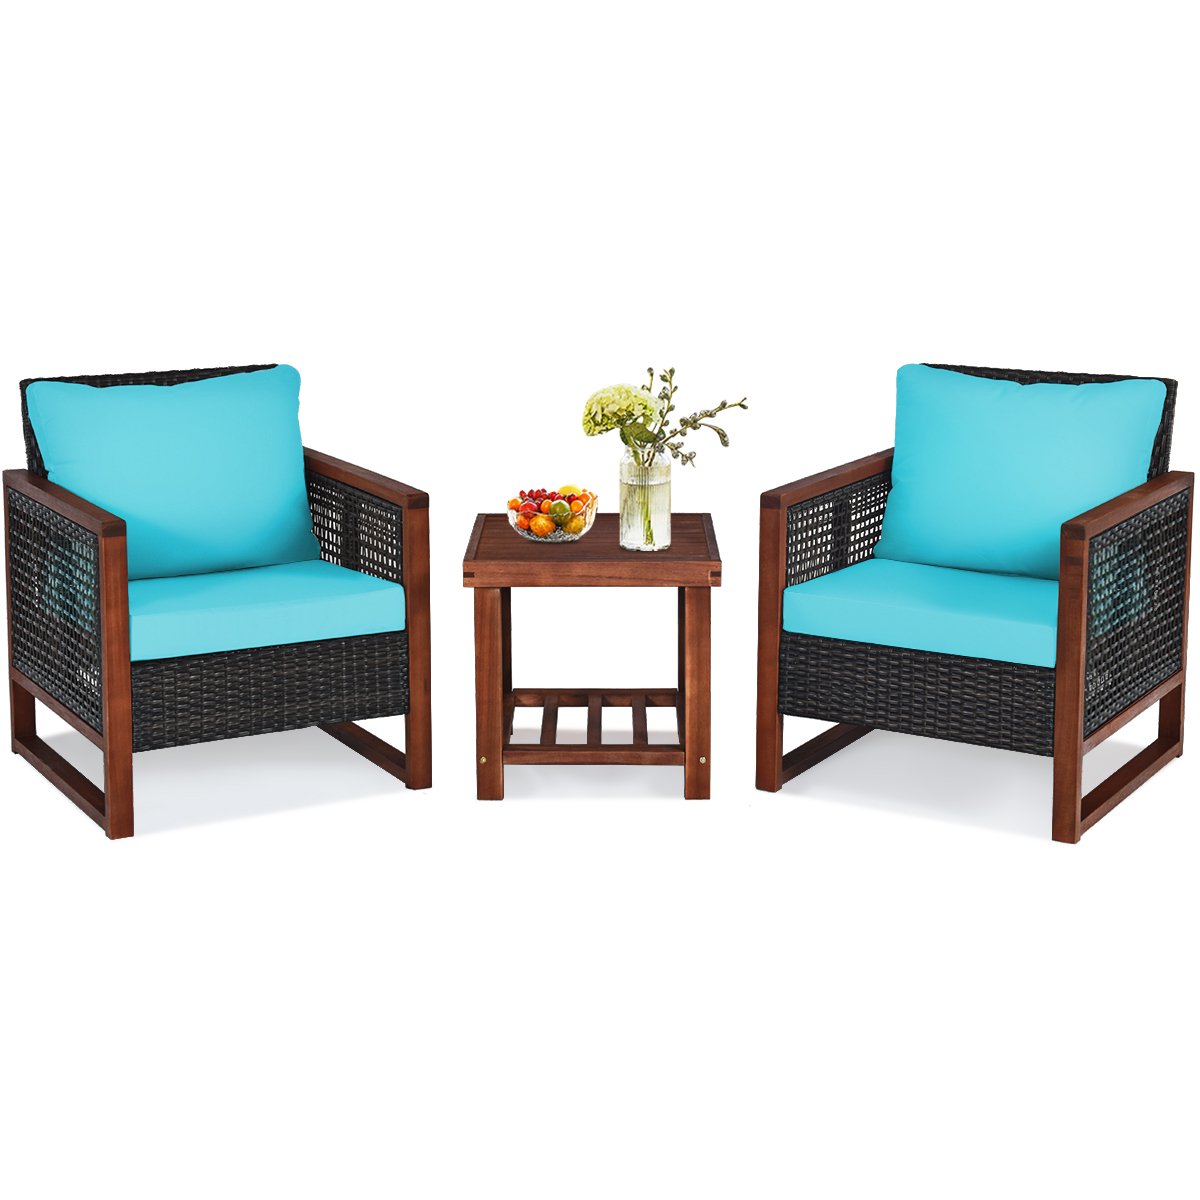 Patiojoy 3PCS Patio Rattan Bistro Set Acacia Wood Frame Sofa and Side Table Turquoise Cushions - image 1 of 6